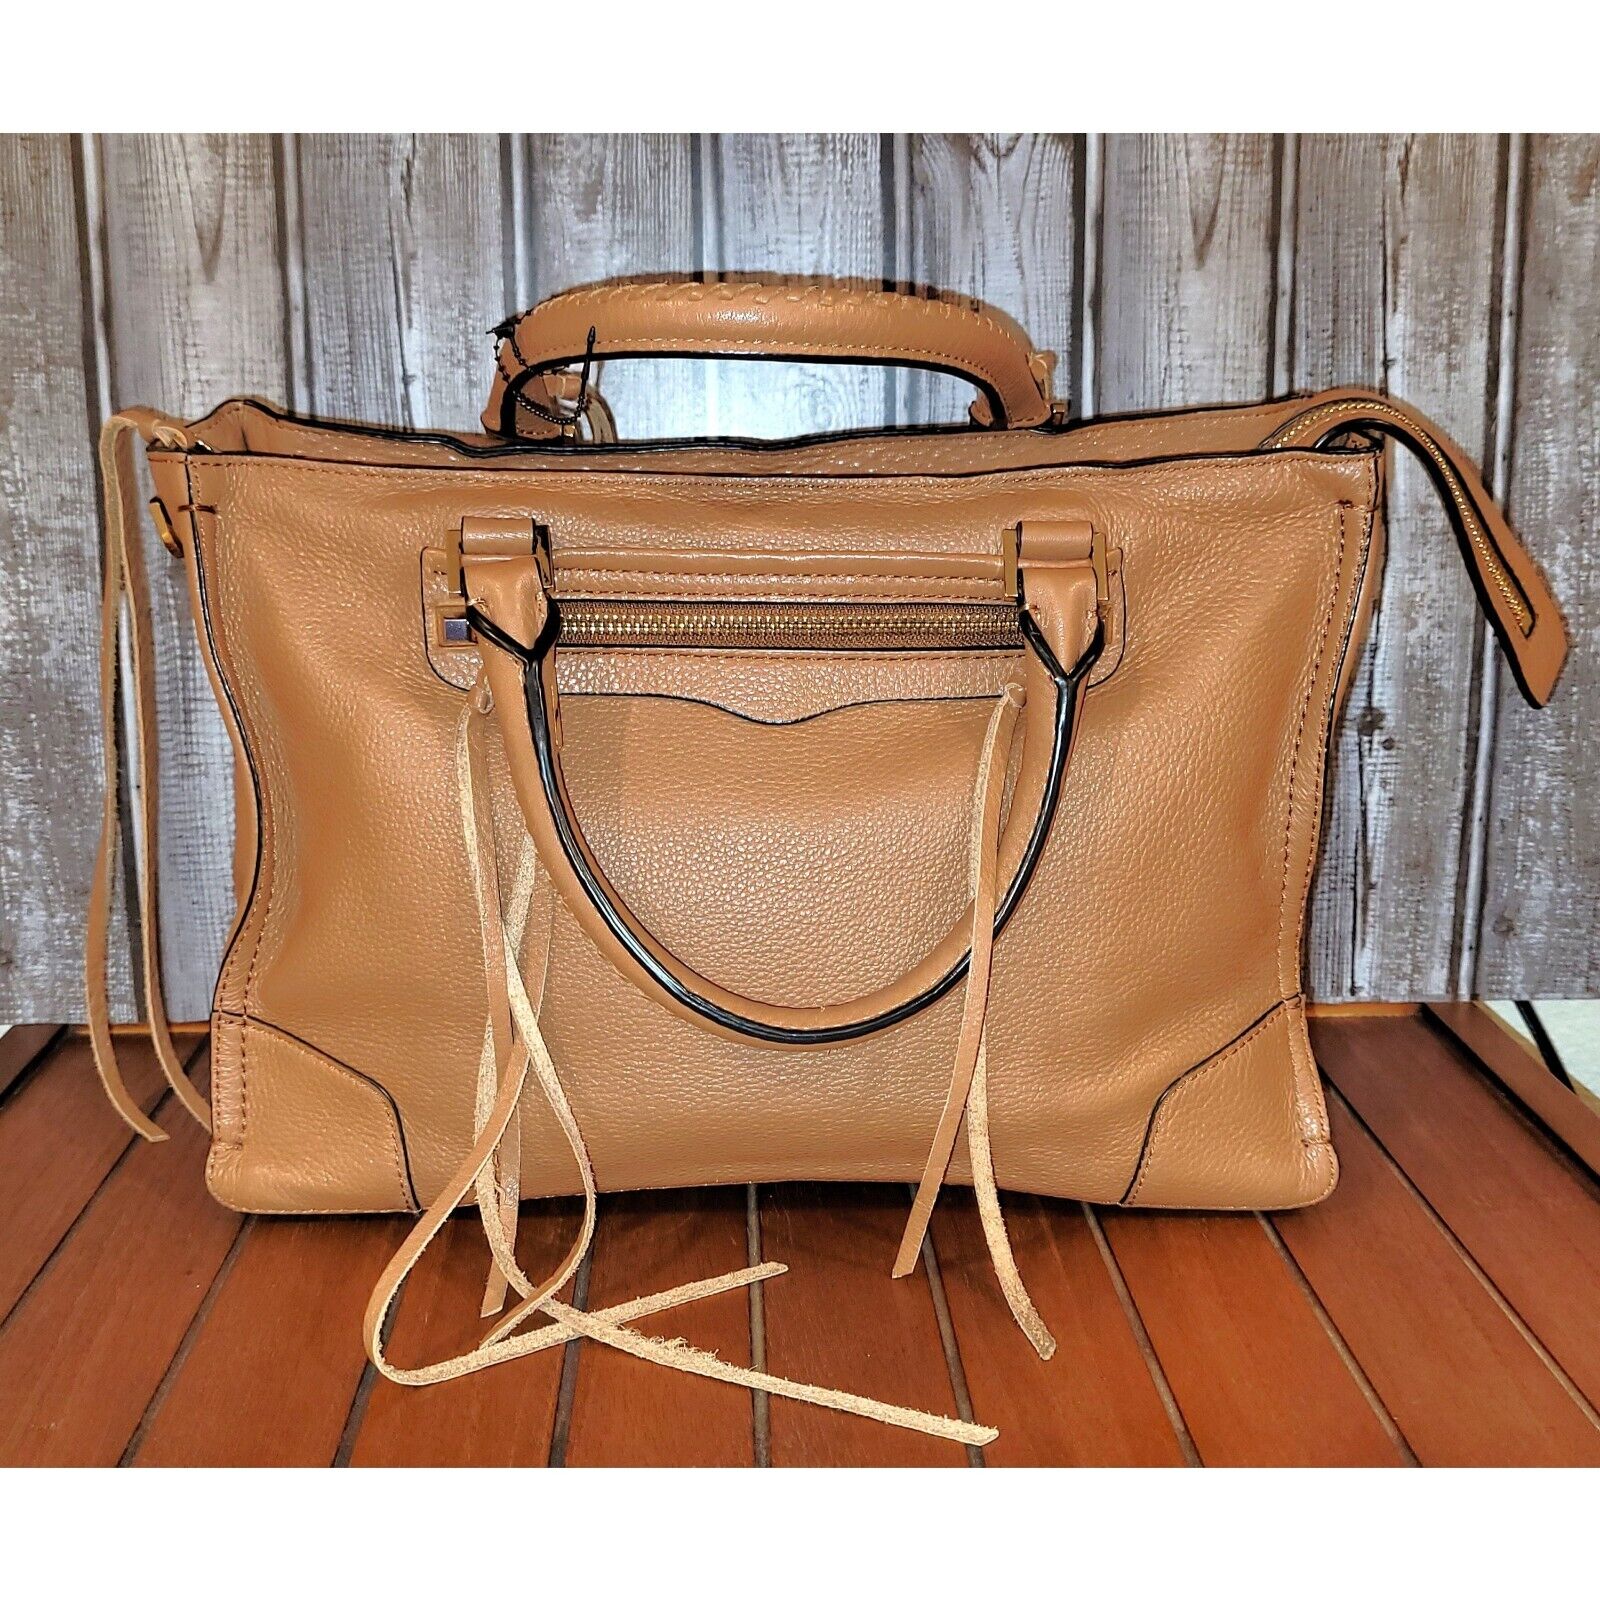 Rebecca Minkoff Brown Leather Bag - image 2